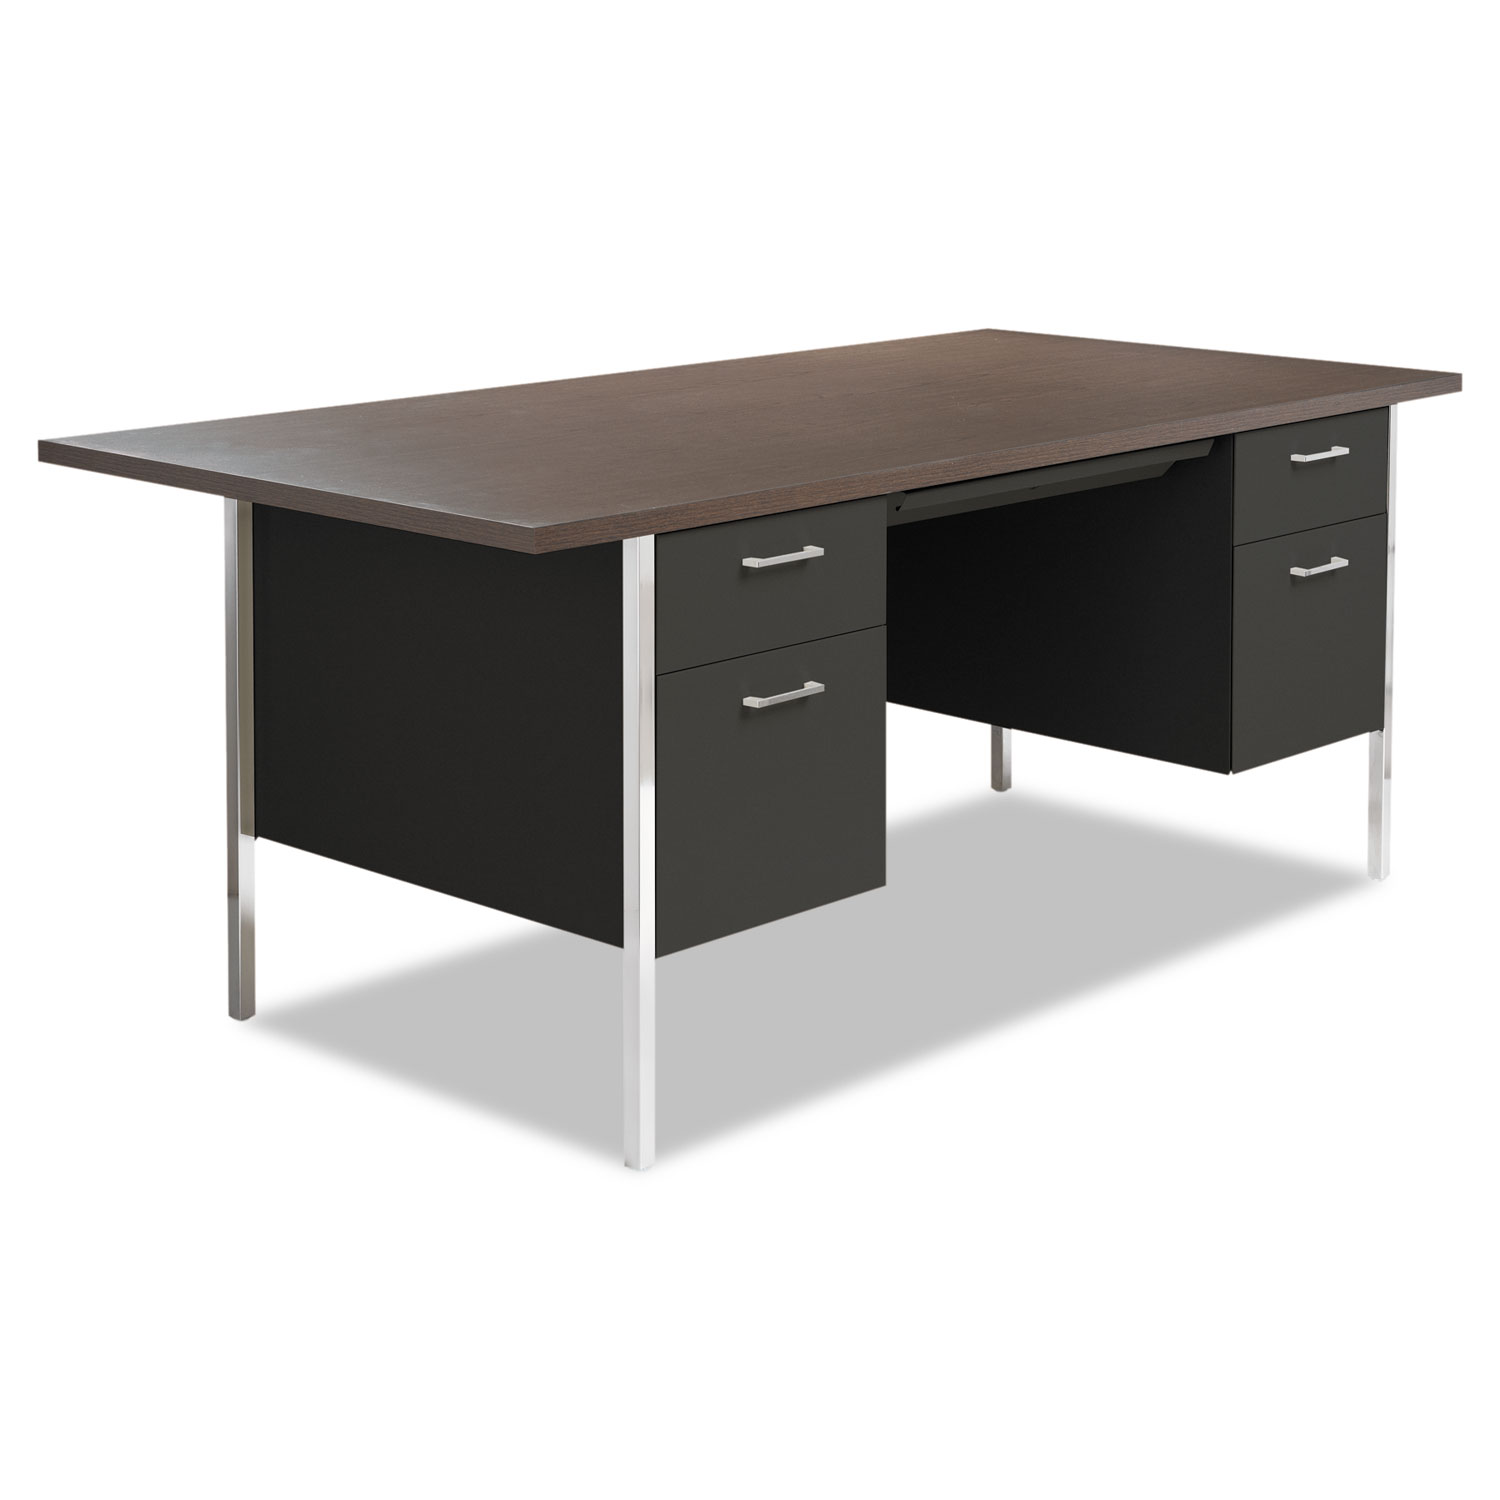  Alera ALESD7236BM Double Pedestal Steel Desk, Metal Desk, 72w x 36d x 29.5h, Mocha/Black (ALESD7236BM) 